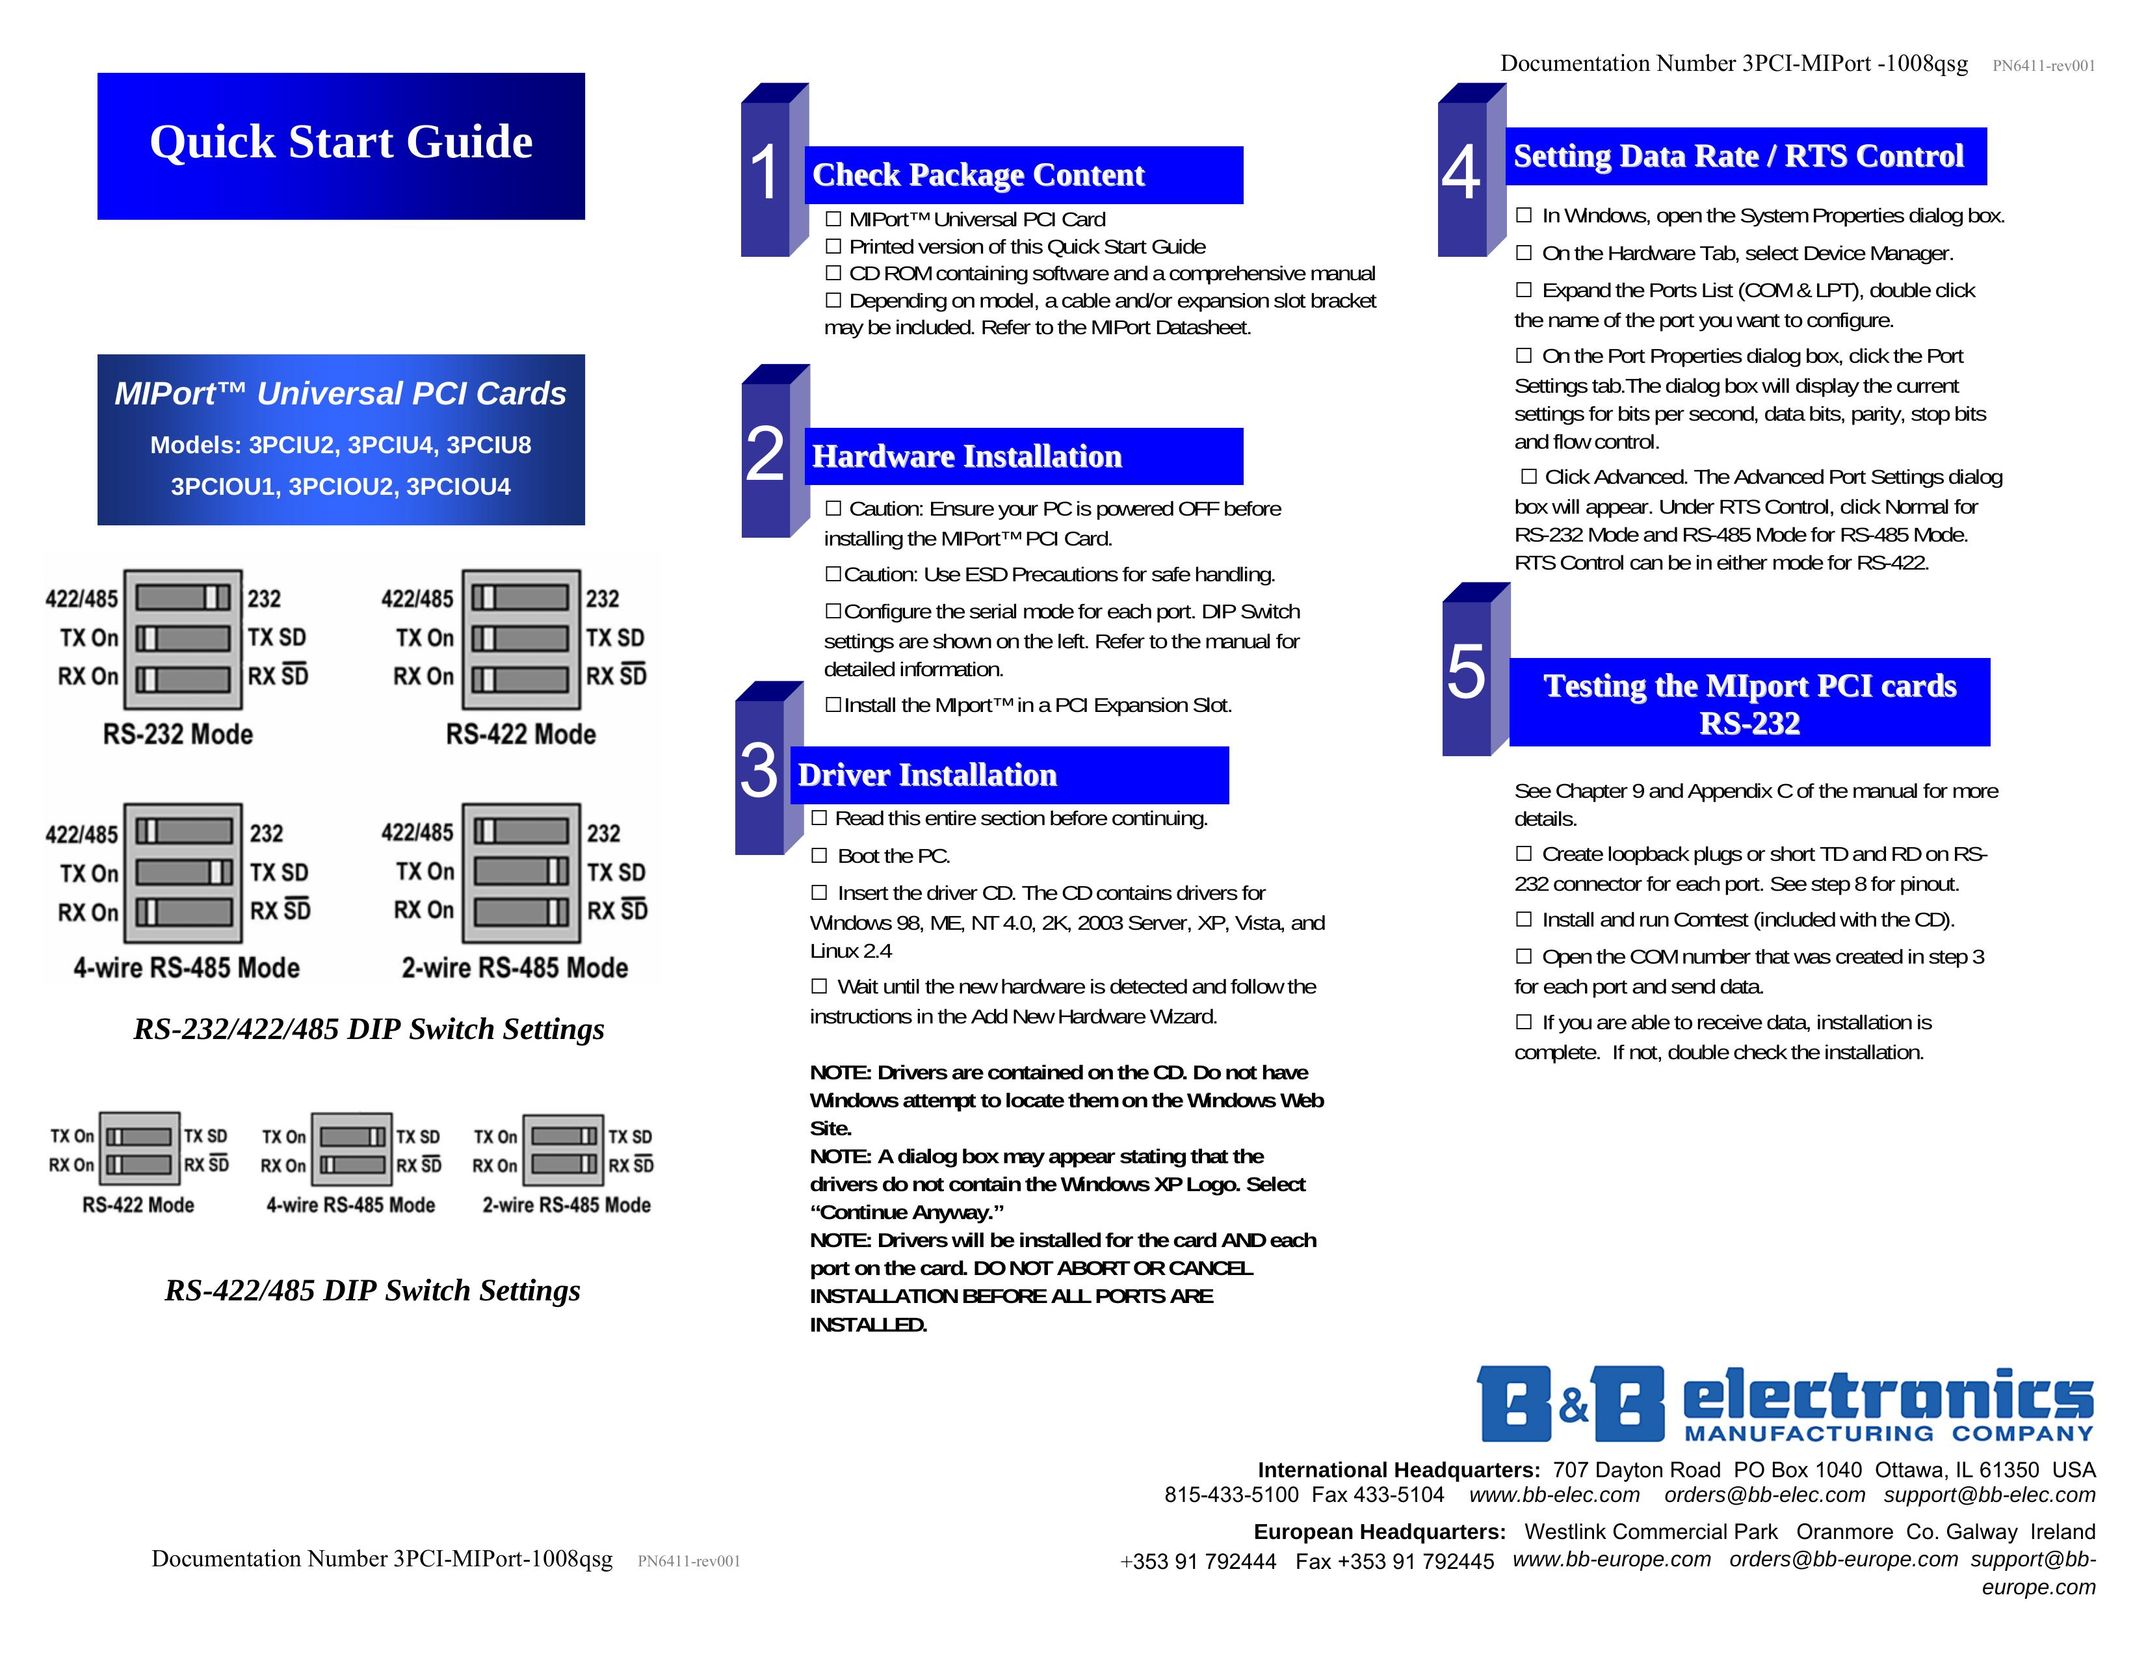 B&B Electronics 3PCIU2 Network Card User Manual